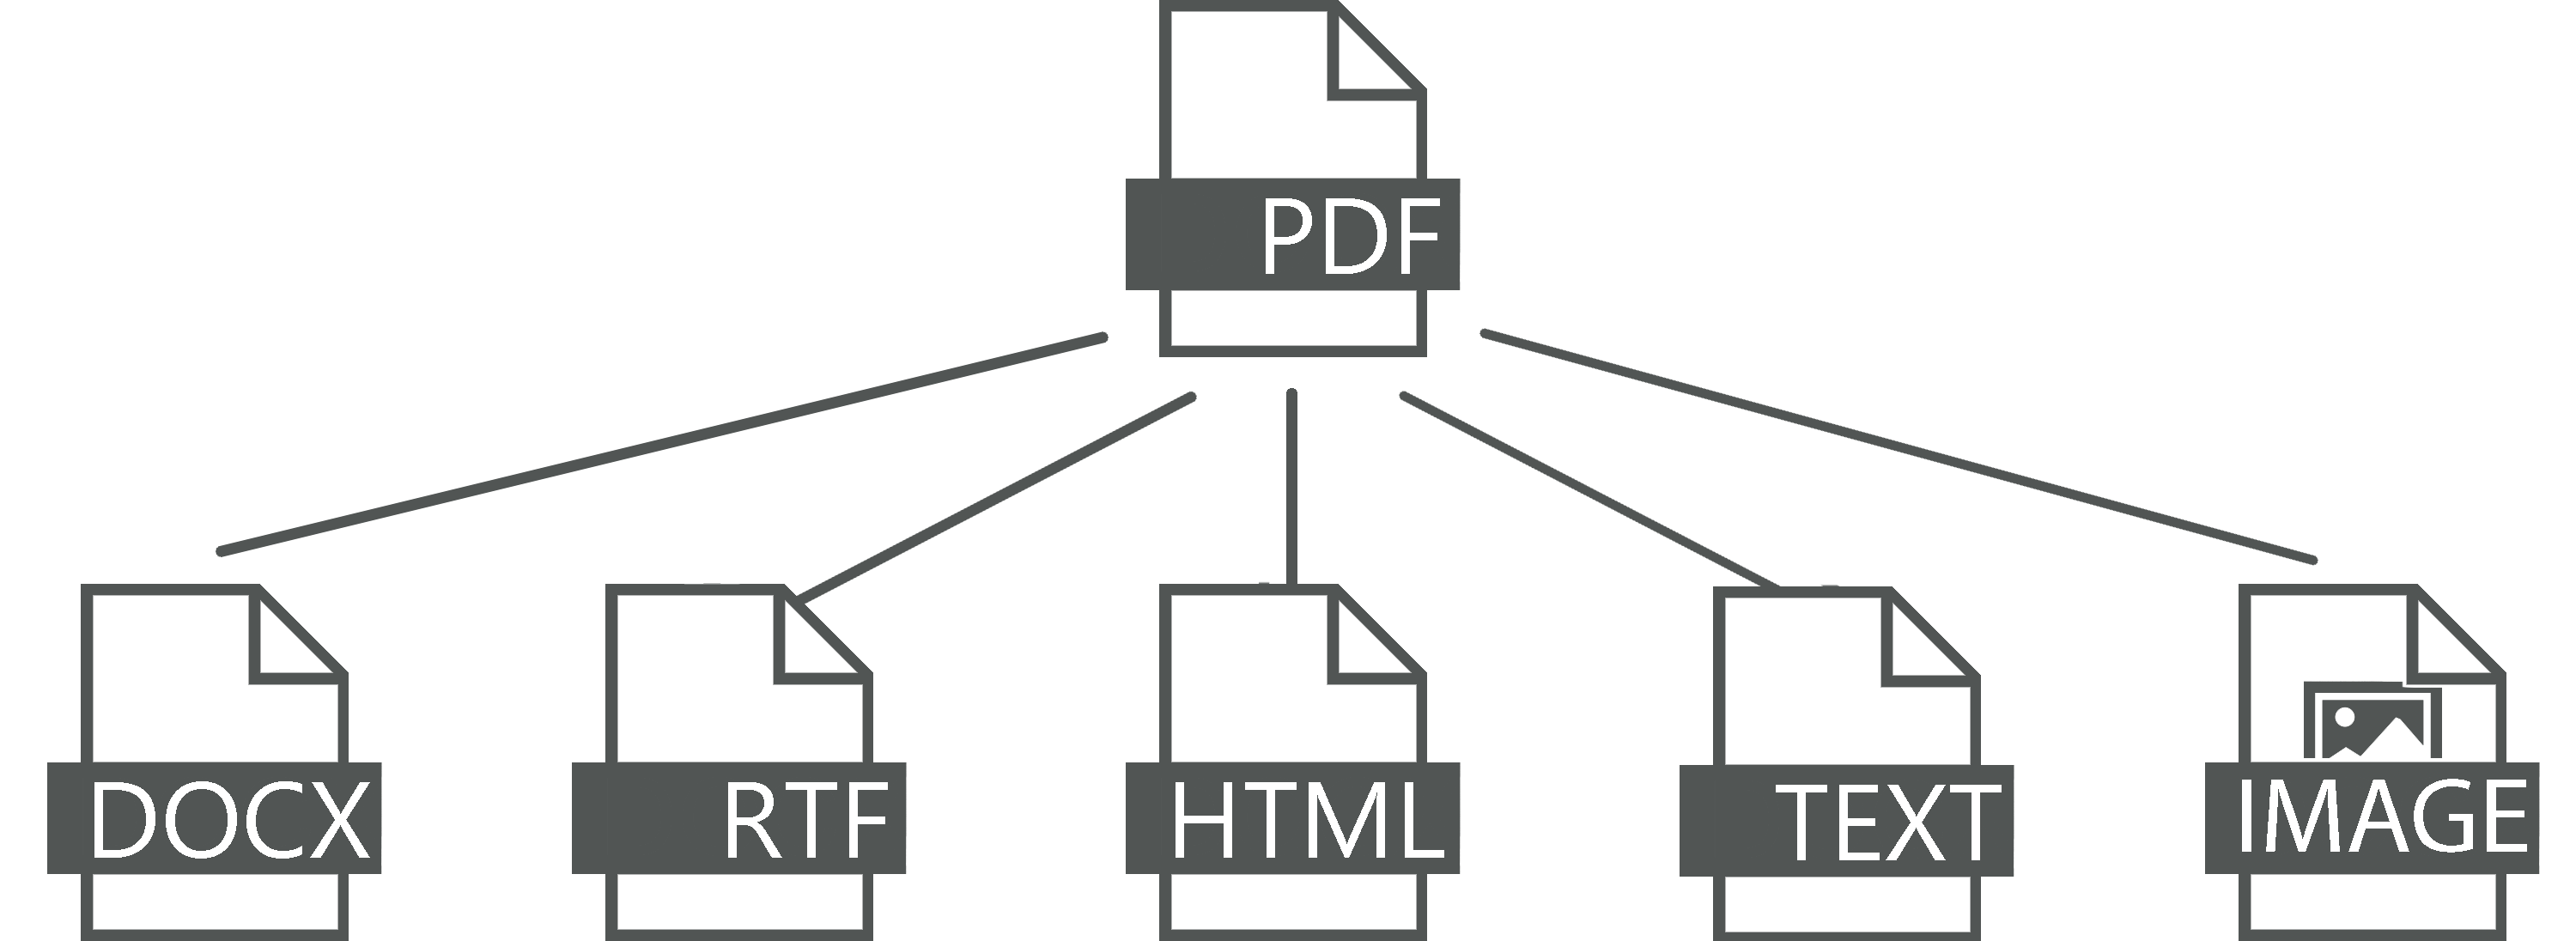 Программы First PDF поддерживает форматы еонвертирования DOCX, RTF текста, JPEG, PNG, GIF, TIFF, BMP, WMF, EMF, HTML, XLS.